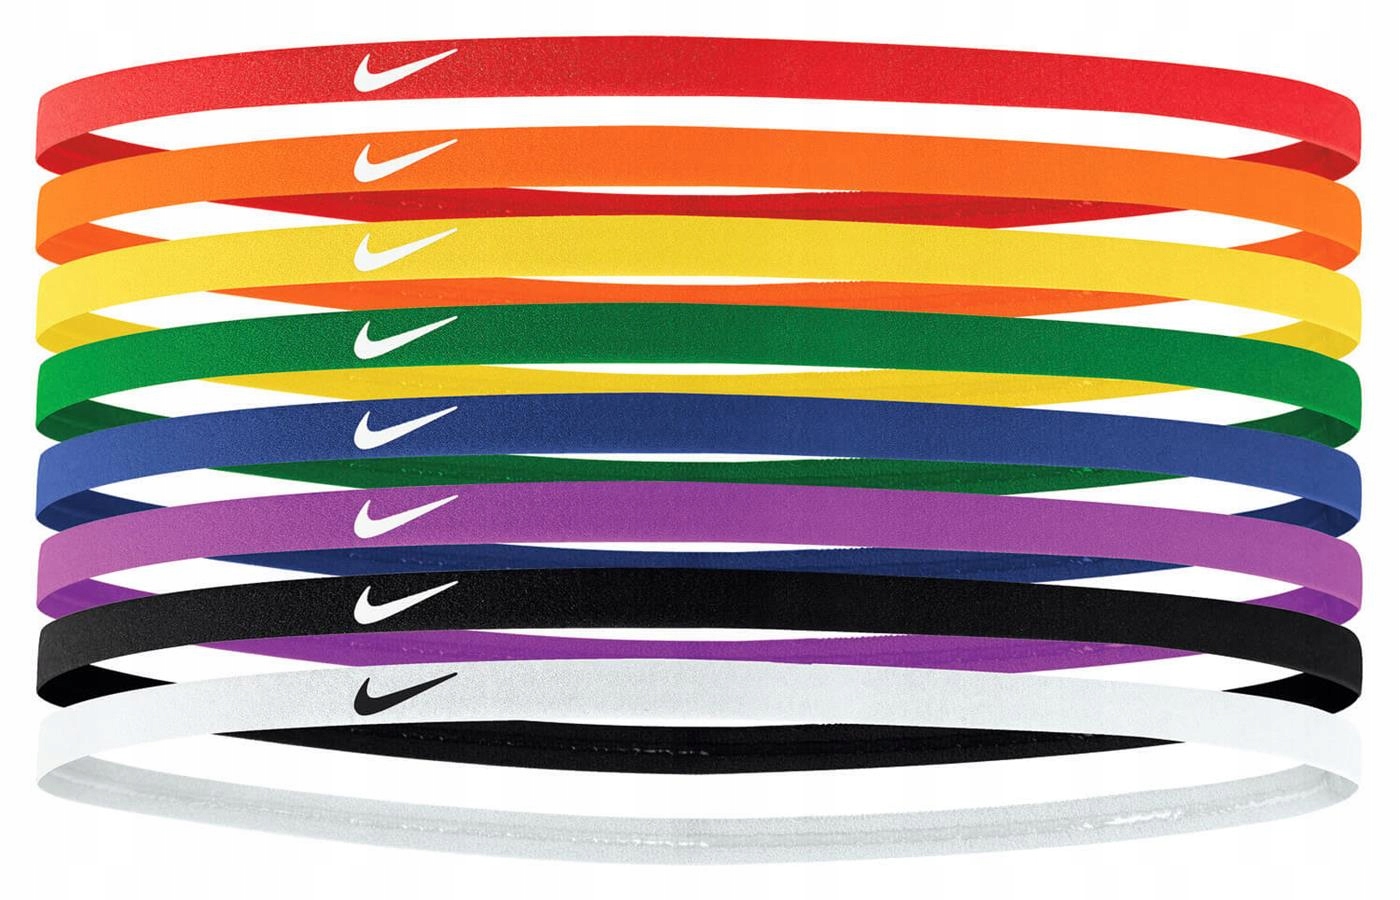 Резинка найк. Nike skinny Hairbands (8 Pack). Nike Hairbands. Резинка Nike. Резинка на голову Nike.